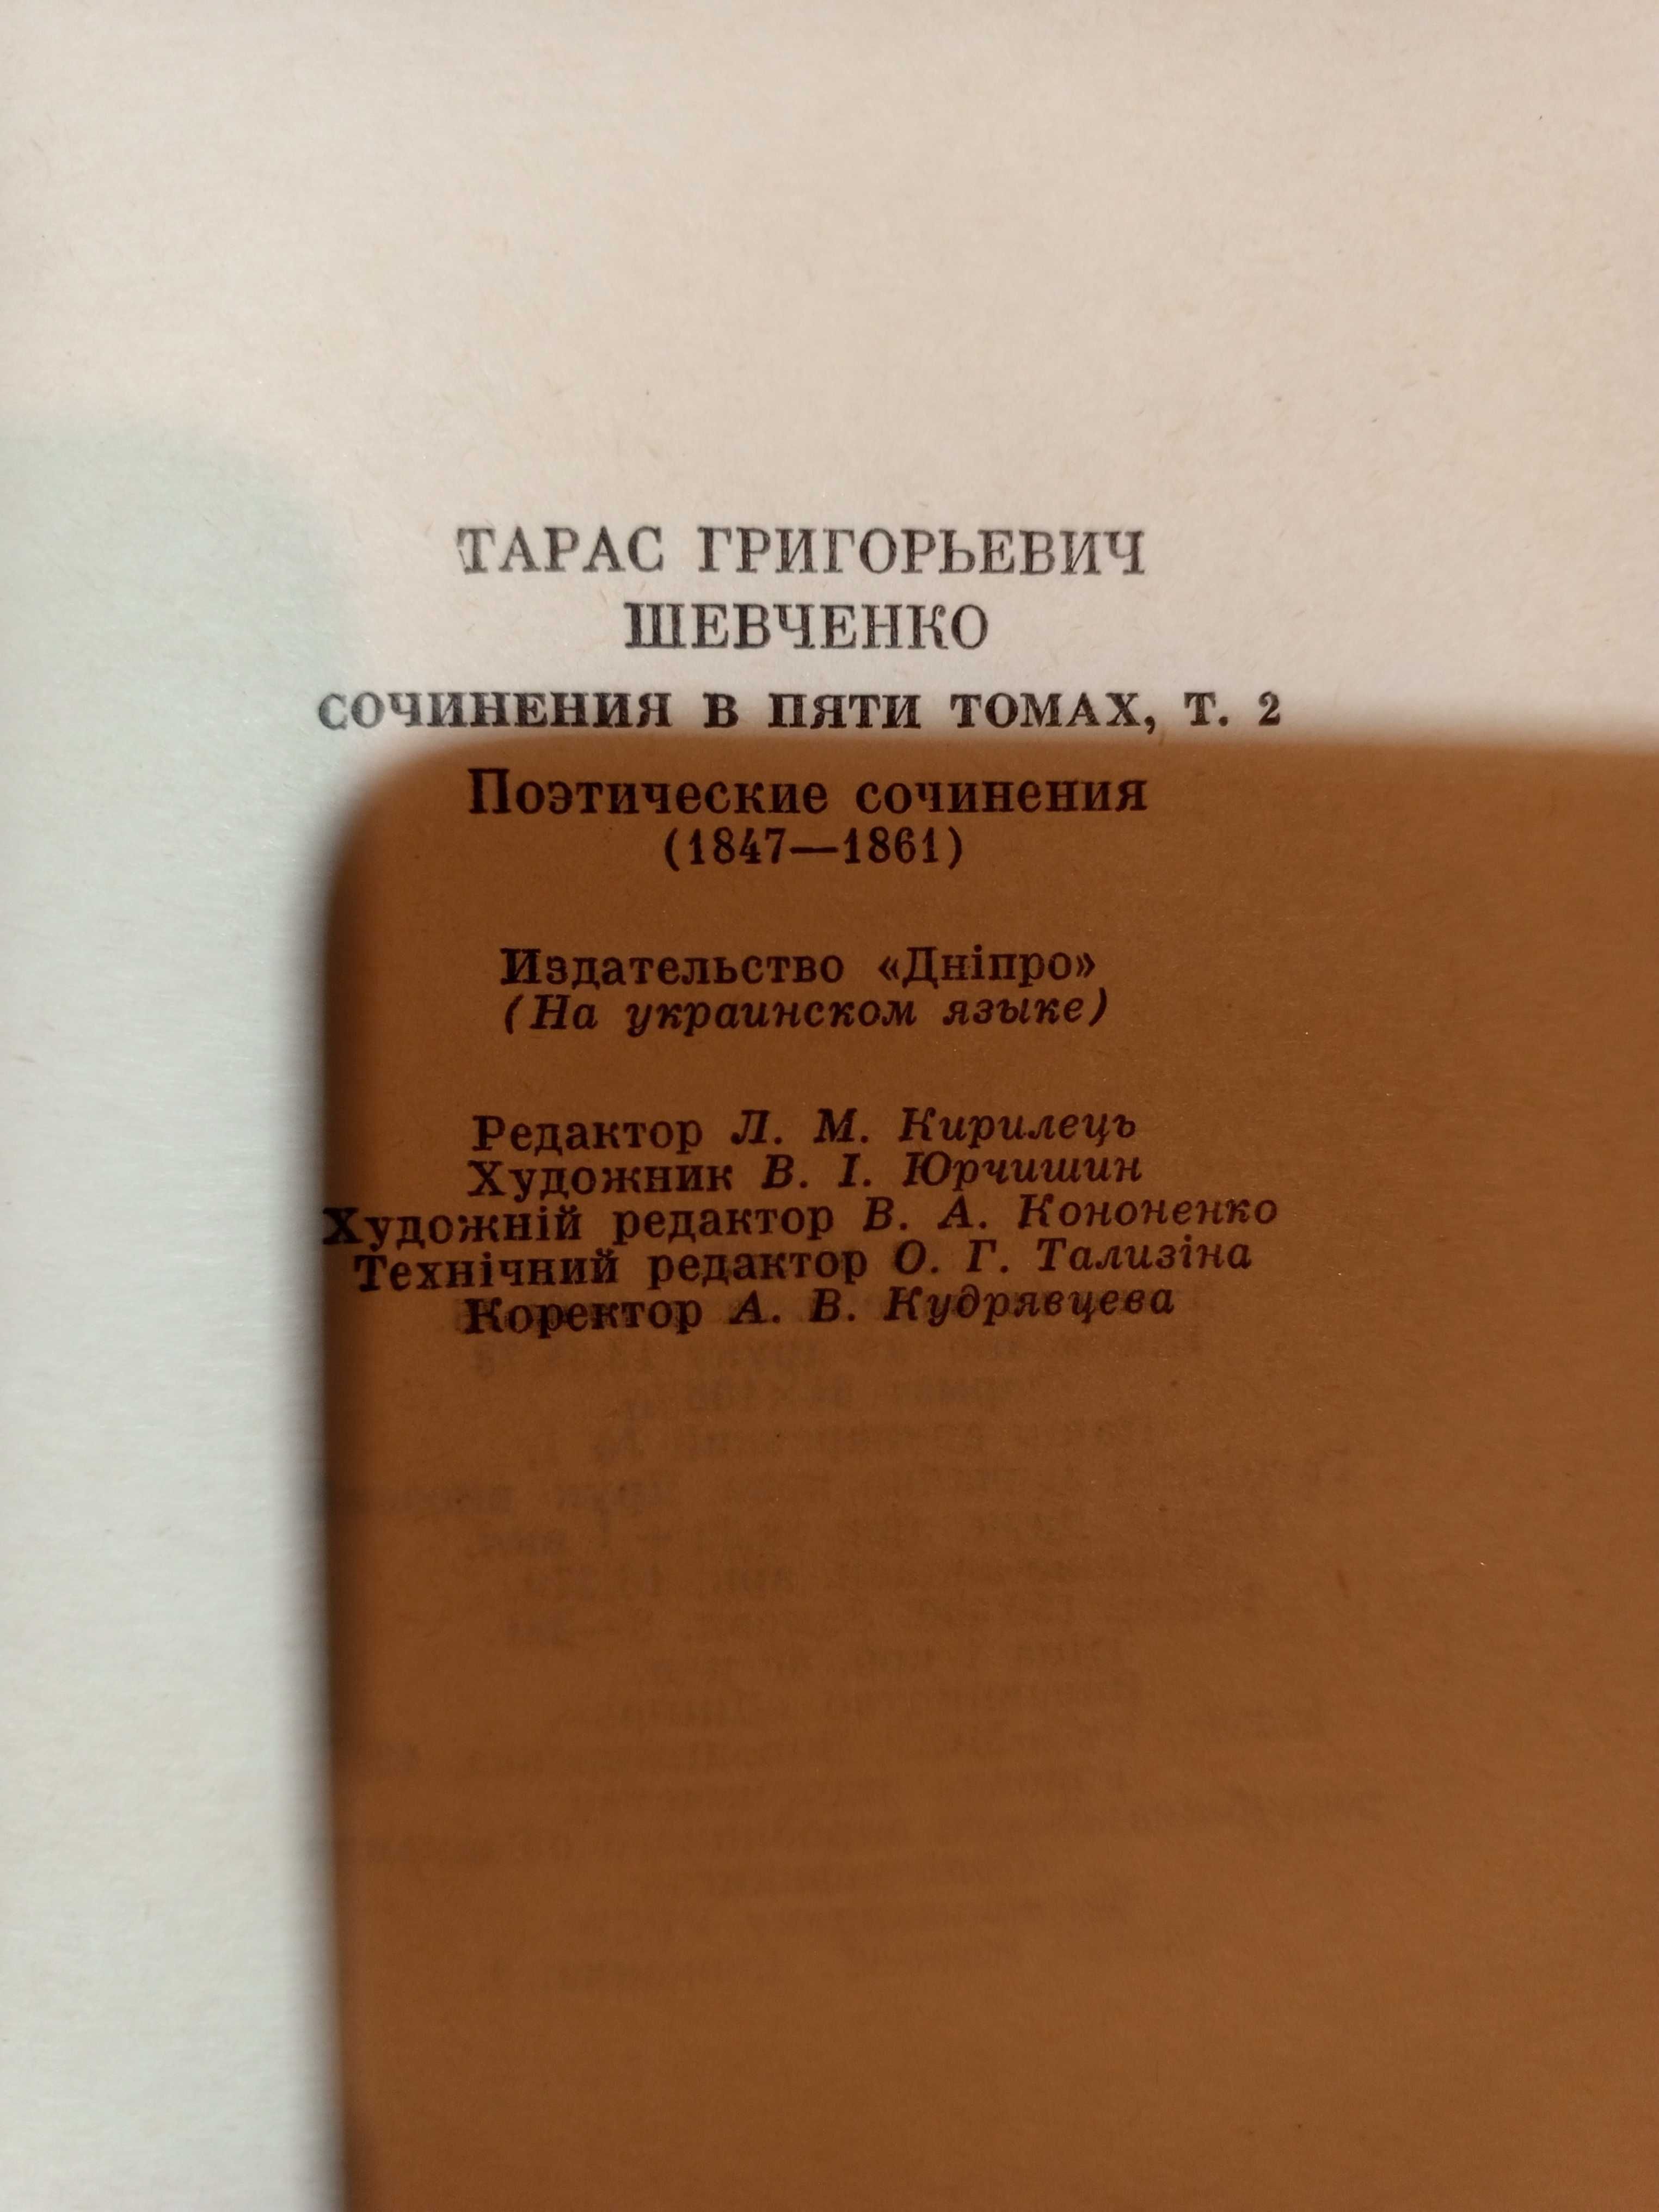 Книга 1986 г. Т. Г. ШЕВЧЕНКО Т. 2 (УКР).